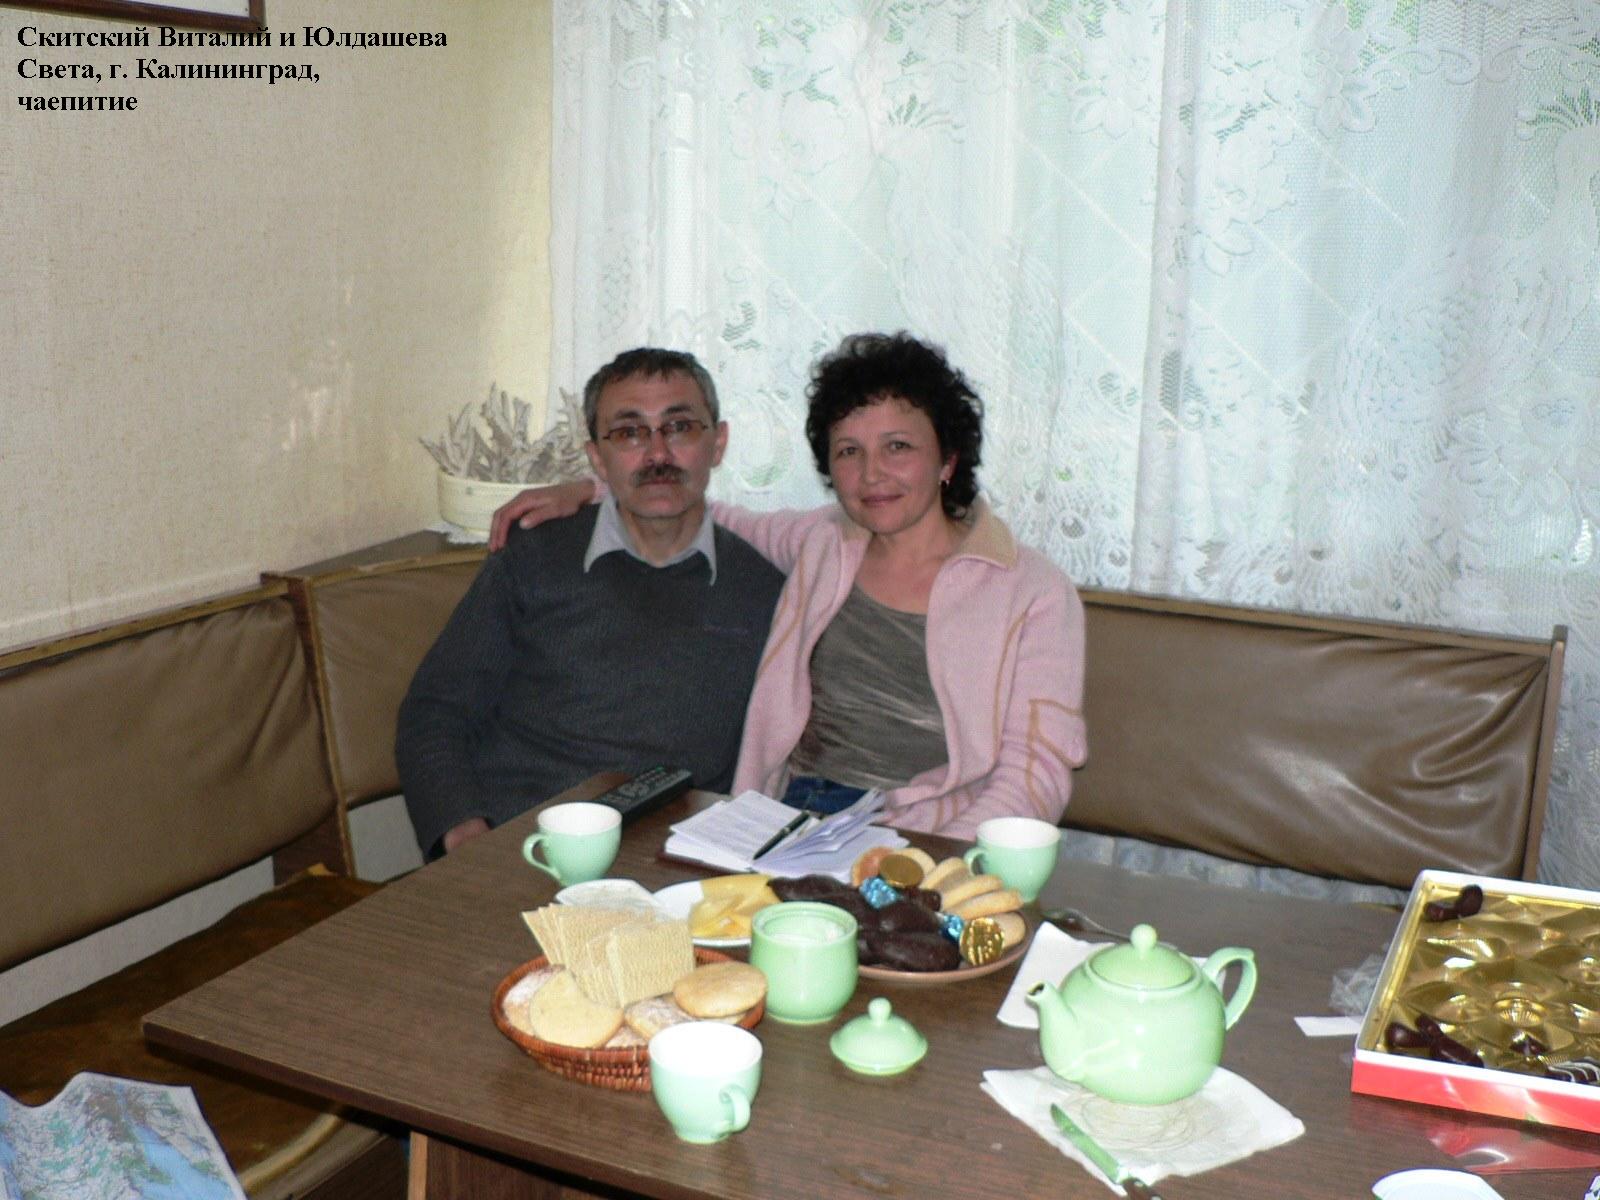 Скитский Виталий и Юлдашева Светлана, г.Калининград, 2007 год.